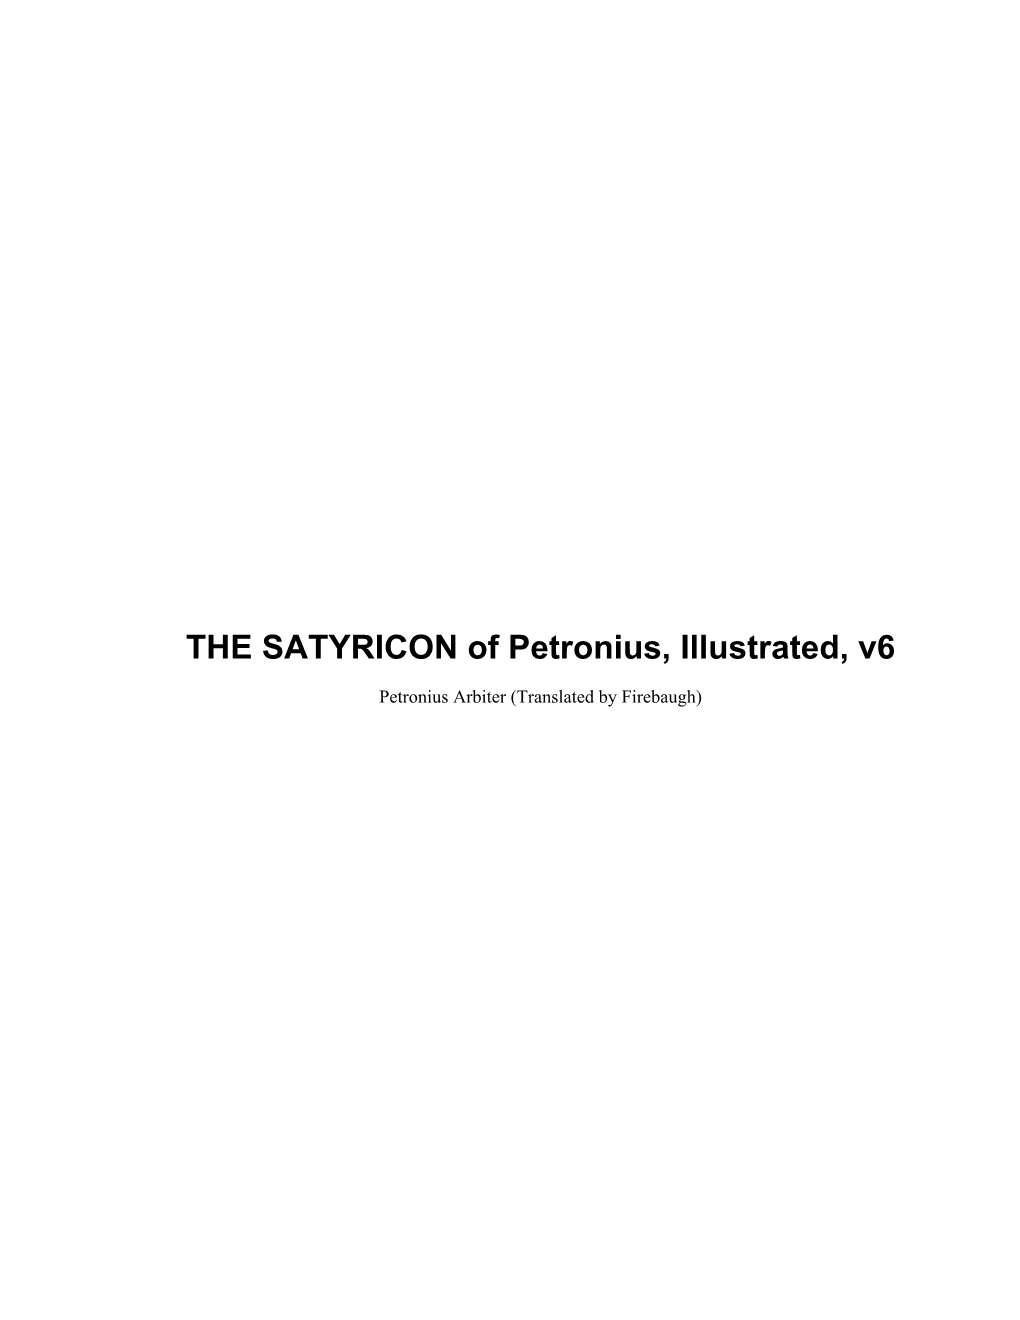 Petronius Arbiter (Translated by Firebaugh)